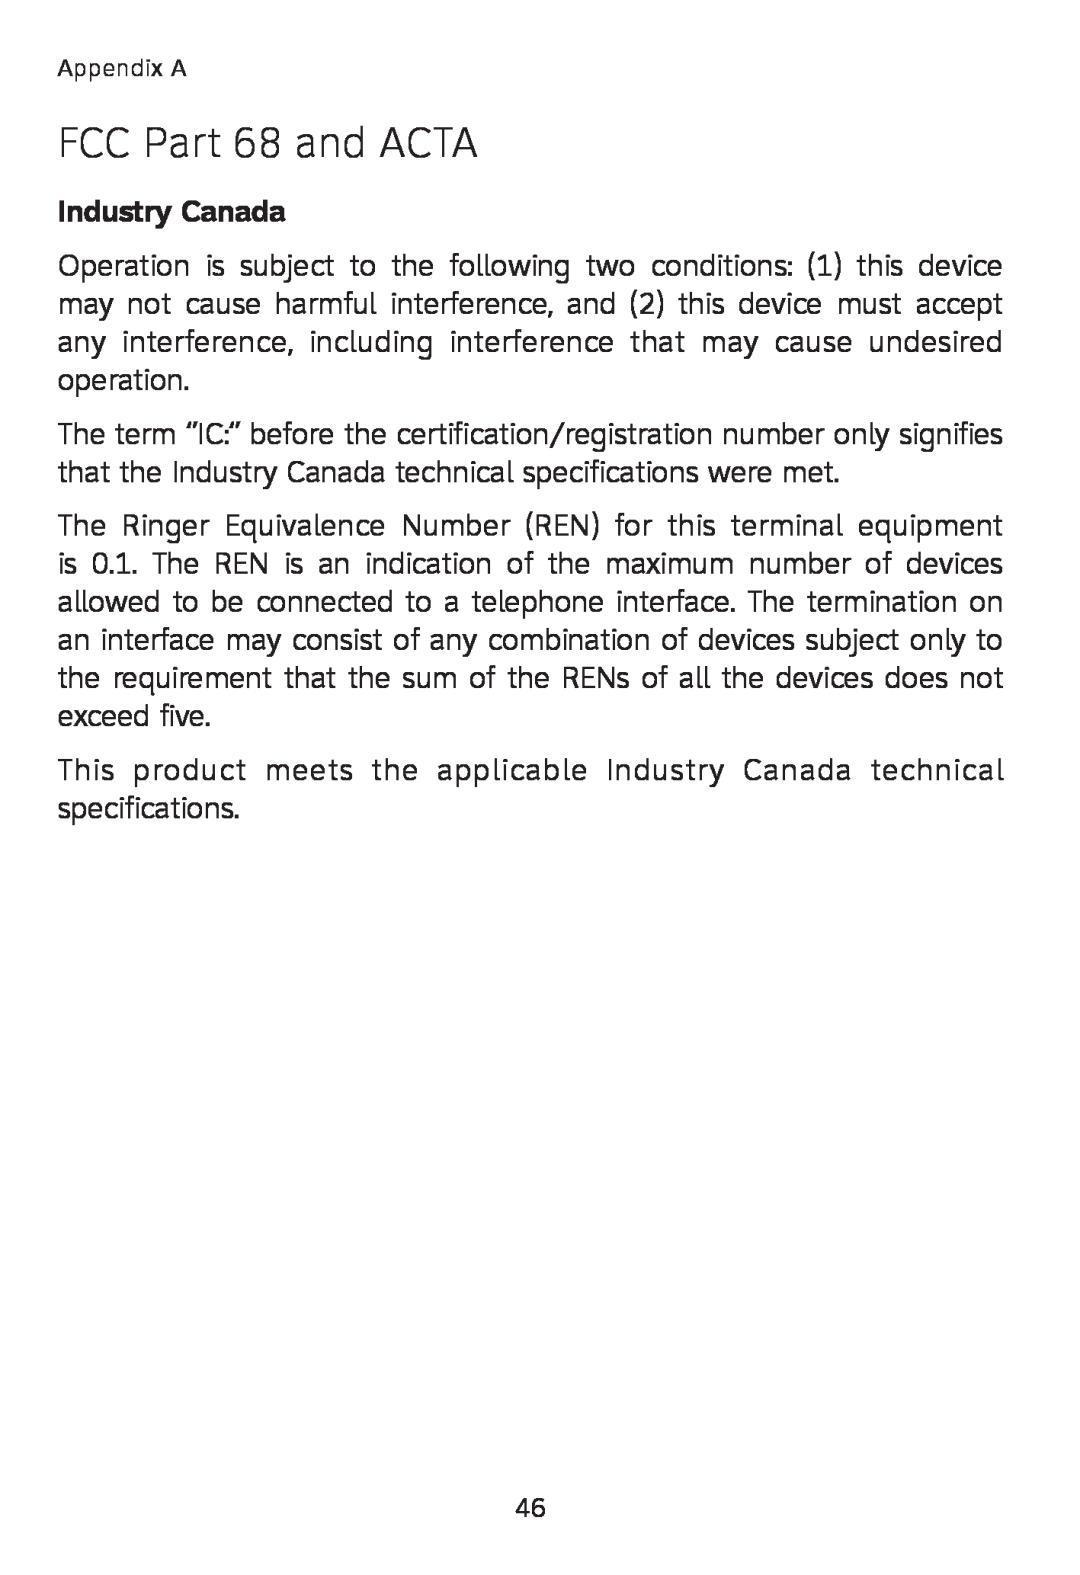 AT&T TL7600 user manual FCC Part 68 and ACTA, Industry Canada 